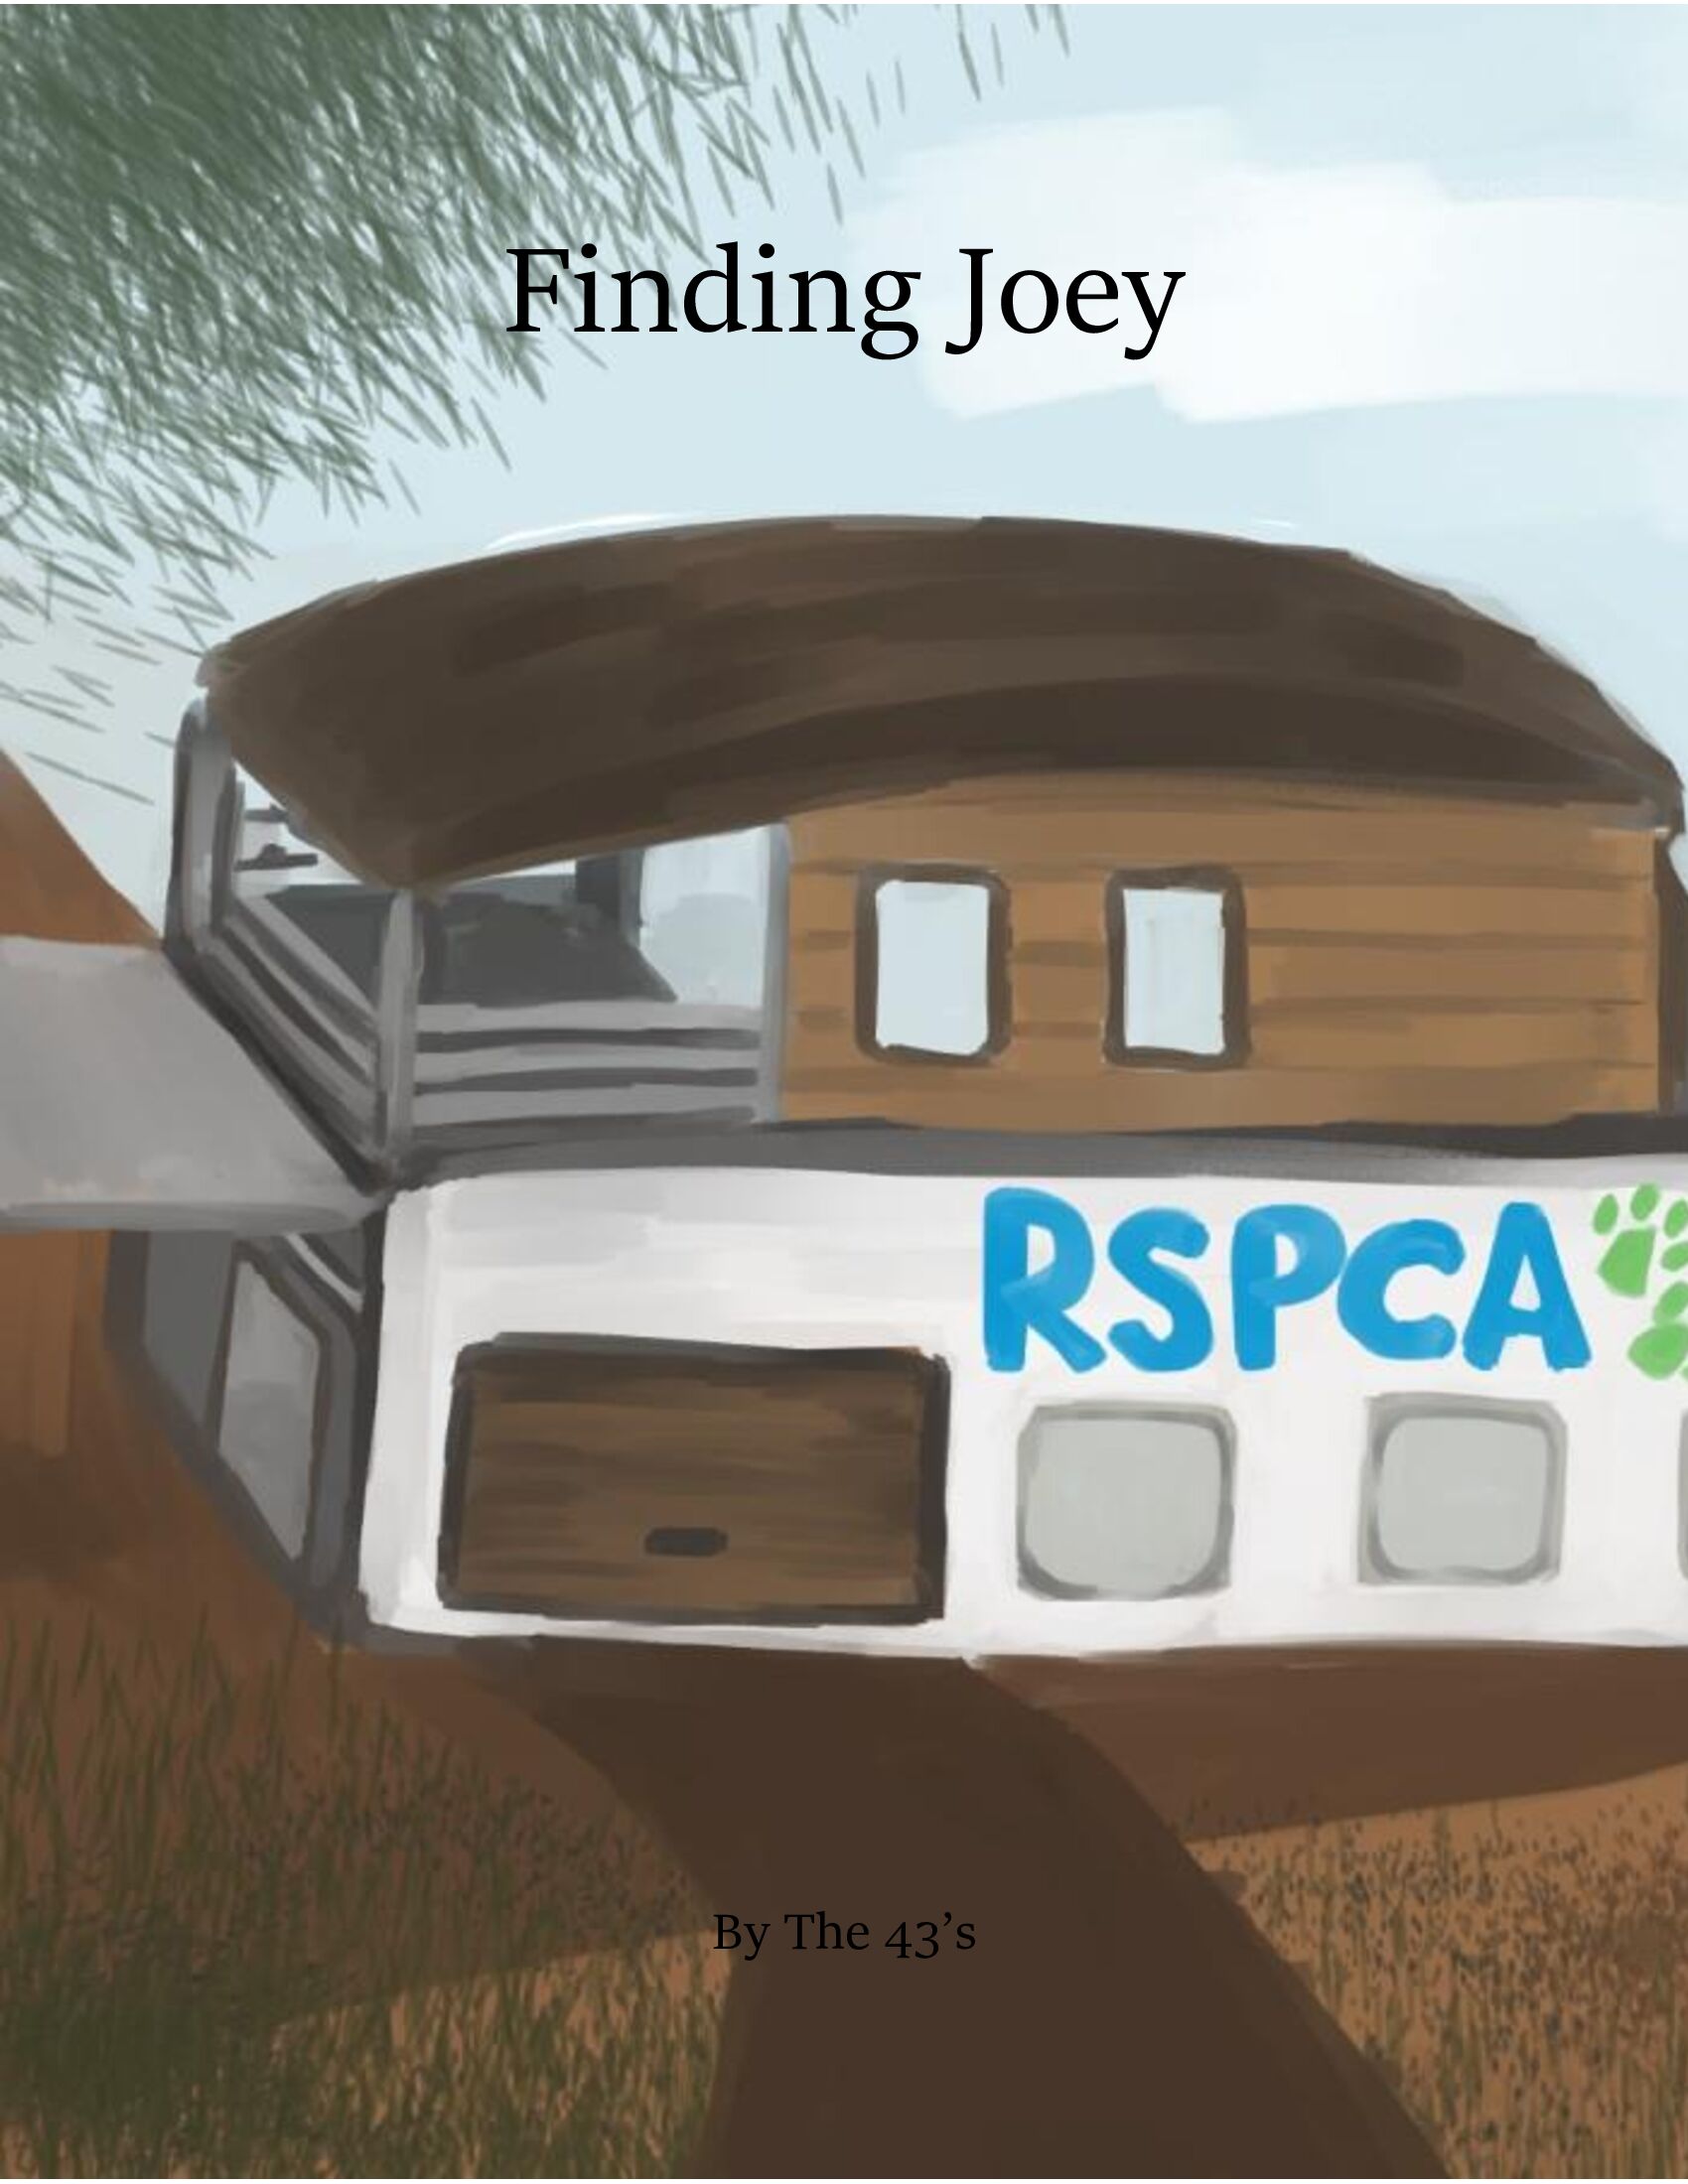 Finding Joey